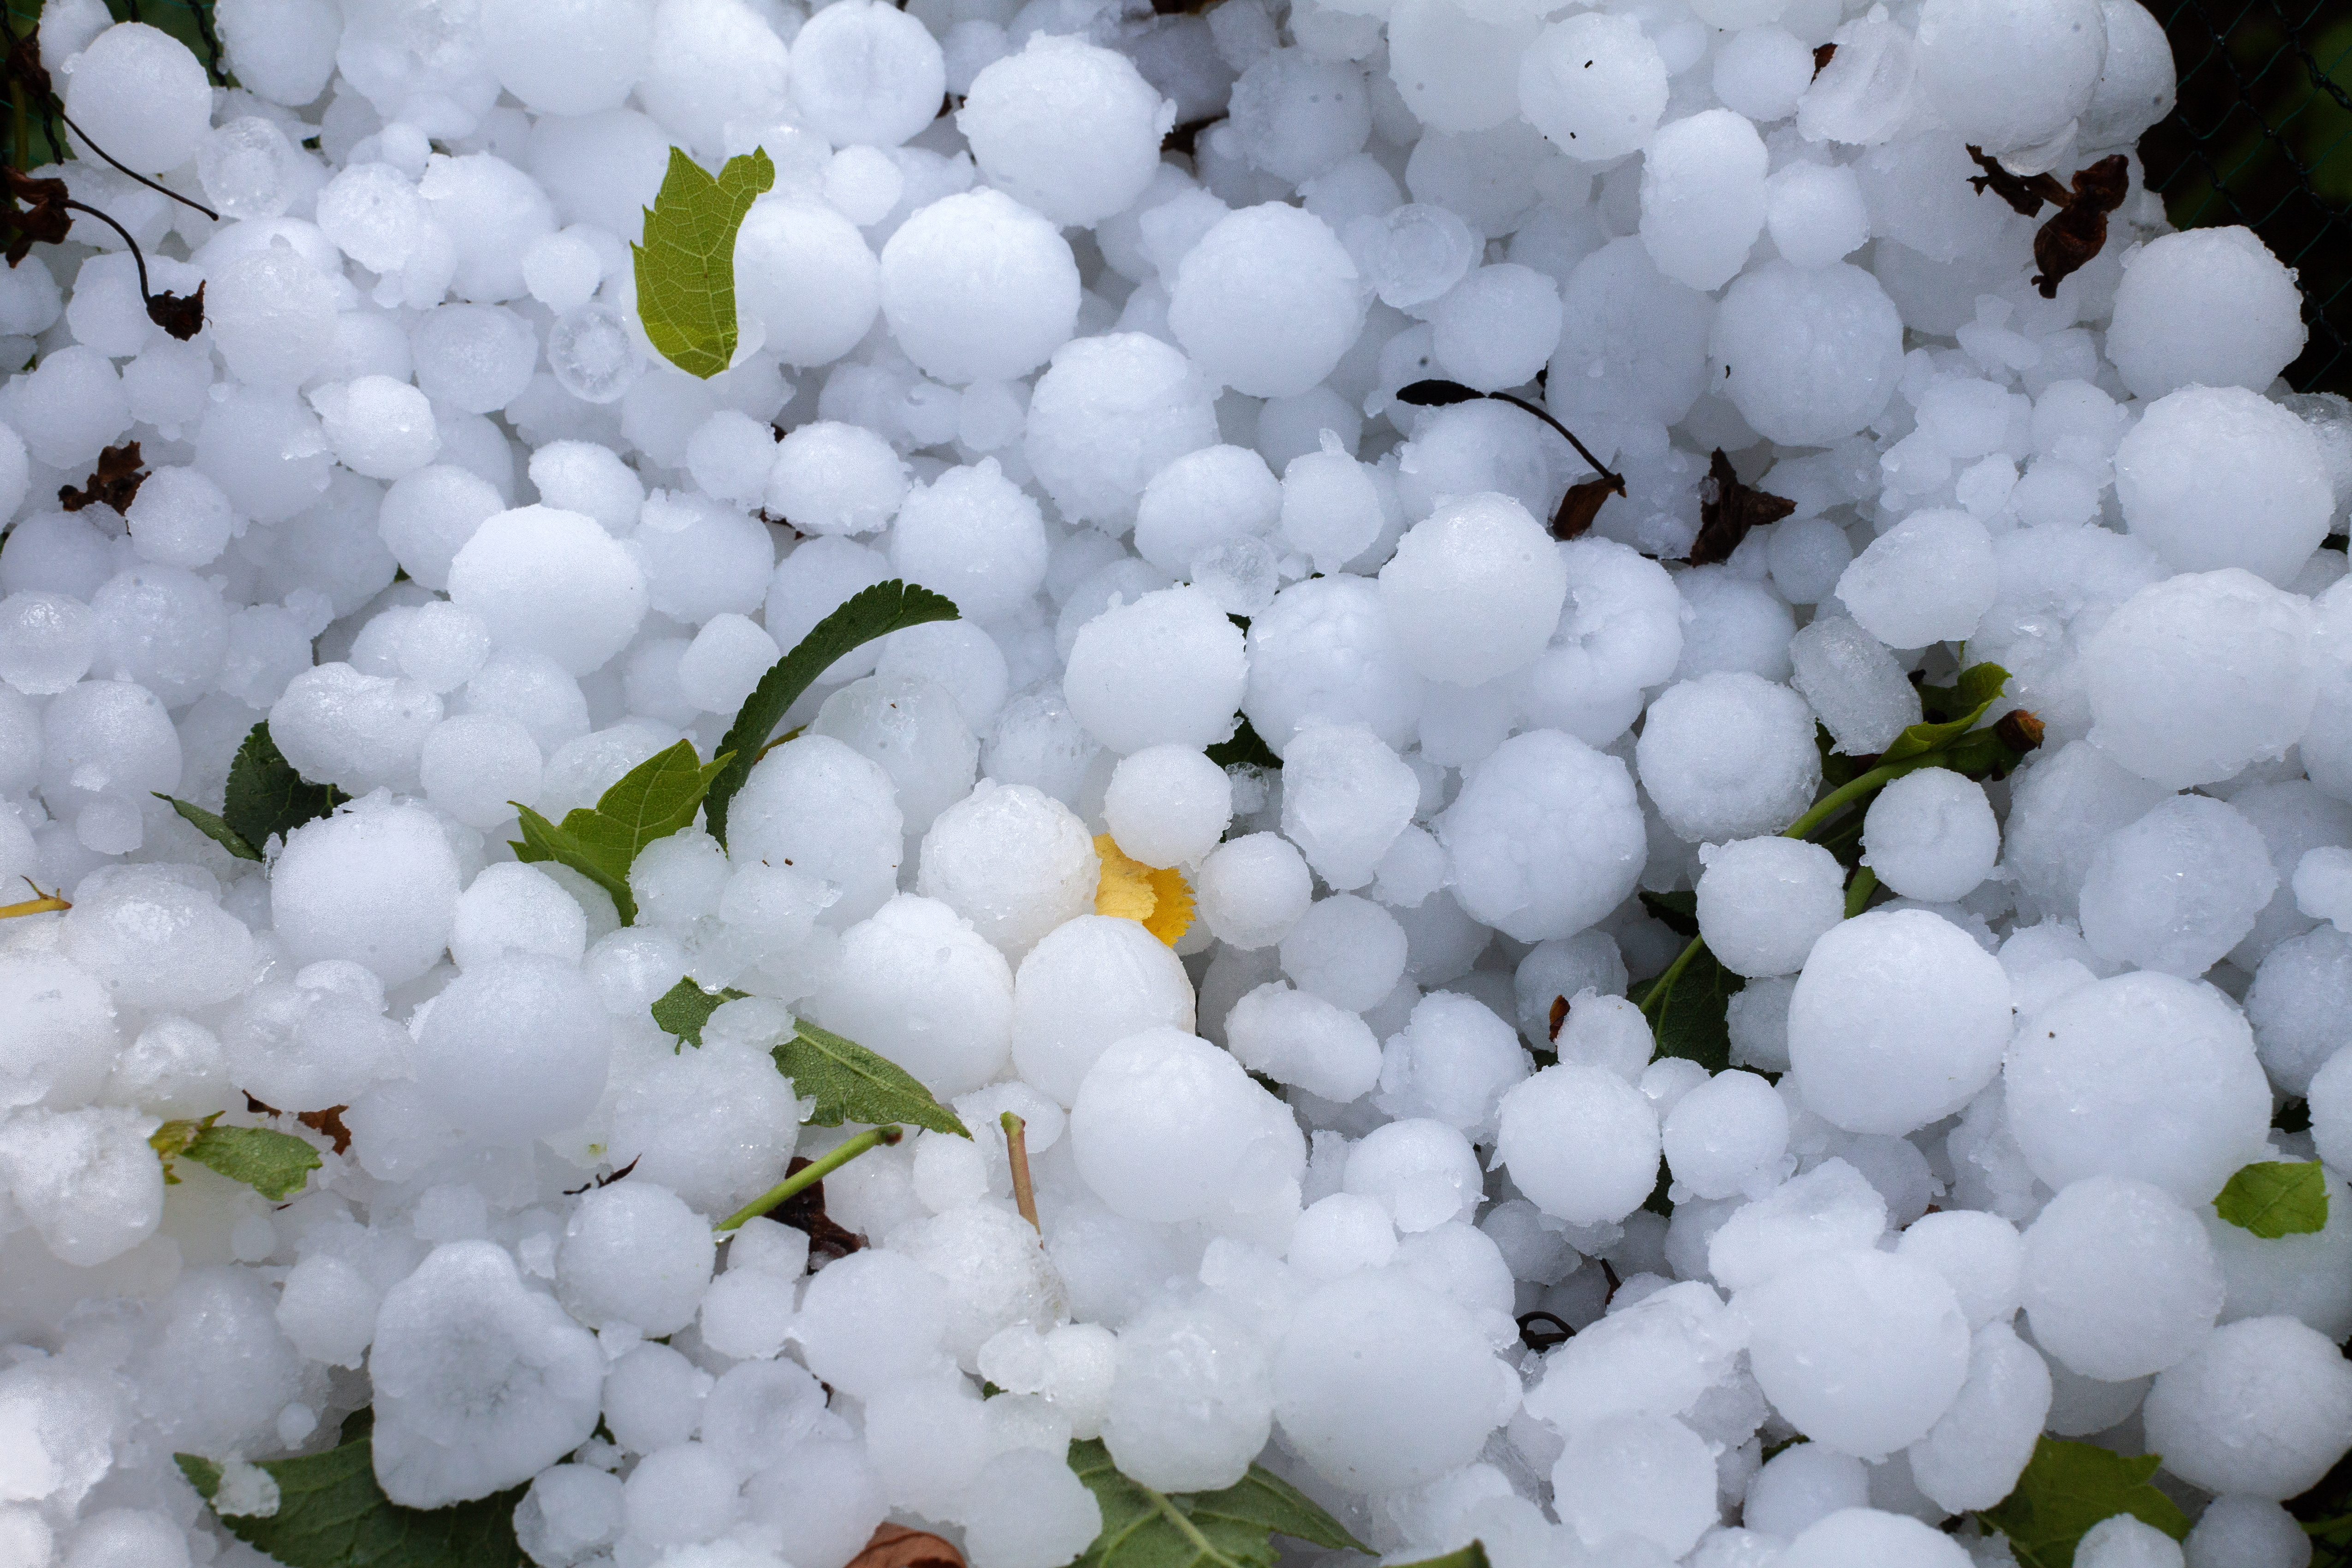 Hailstones lying on the ground